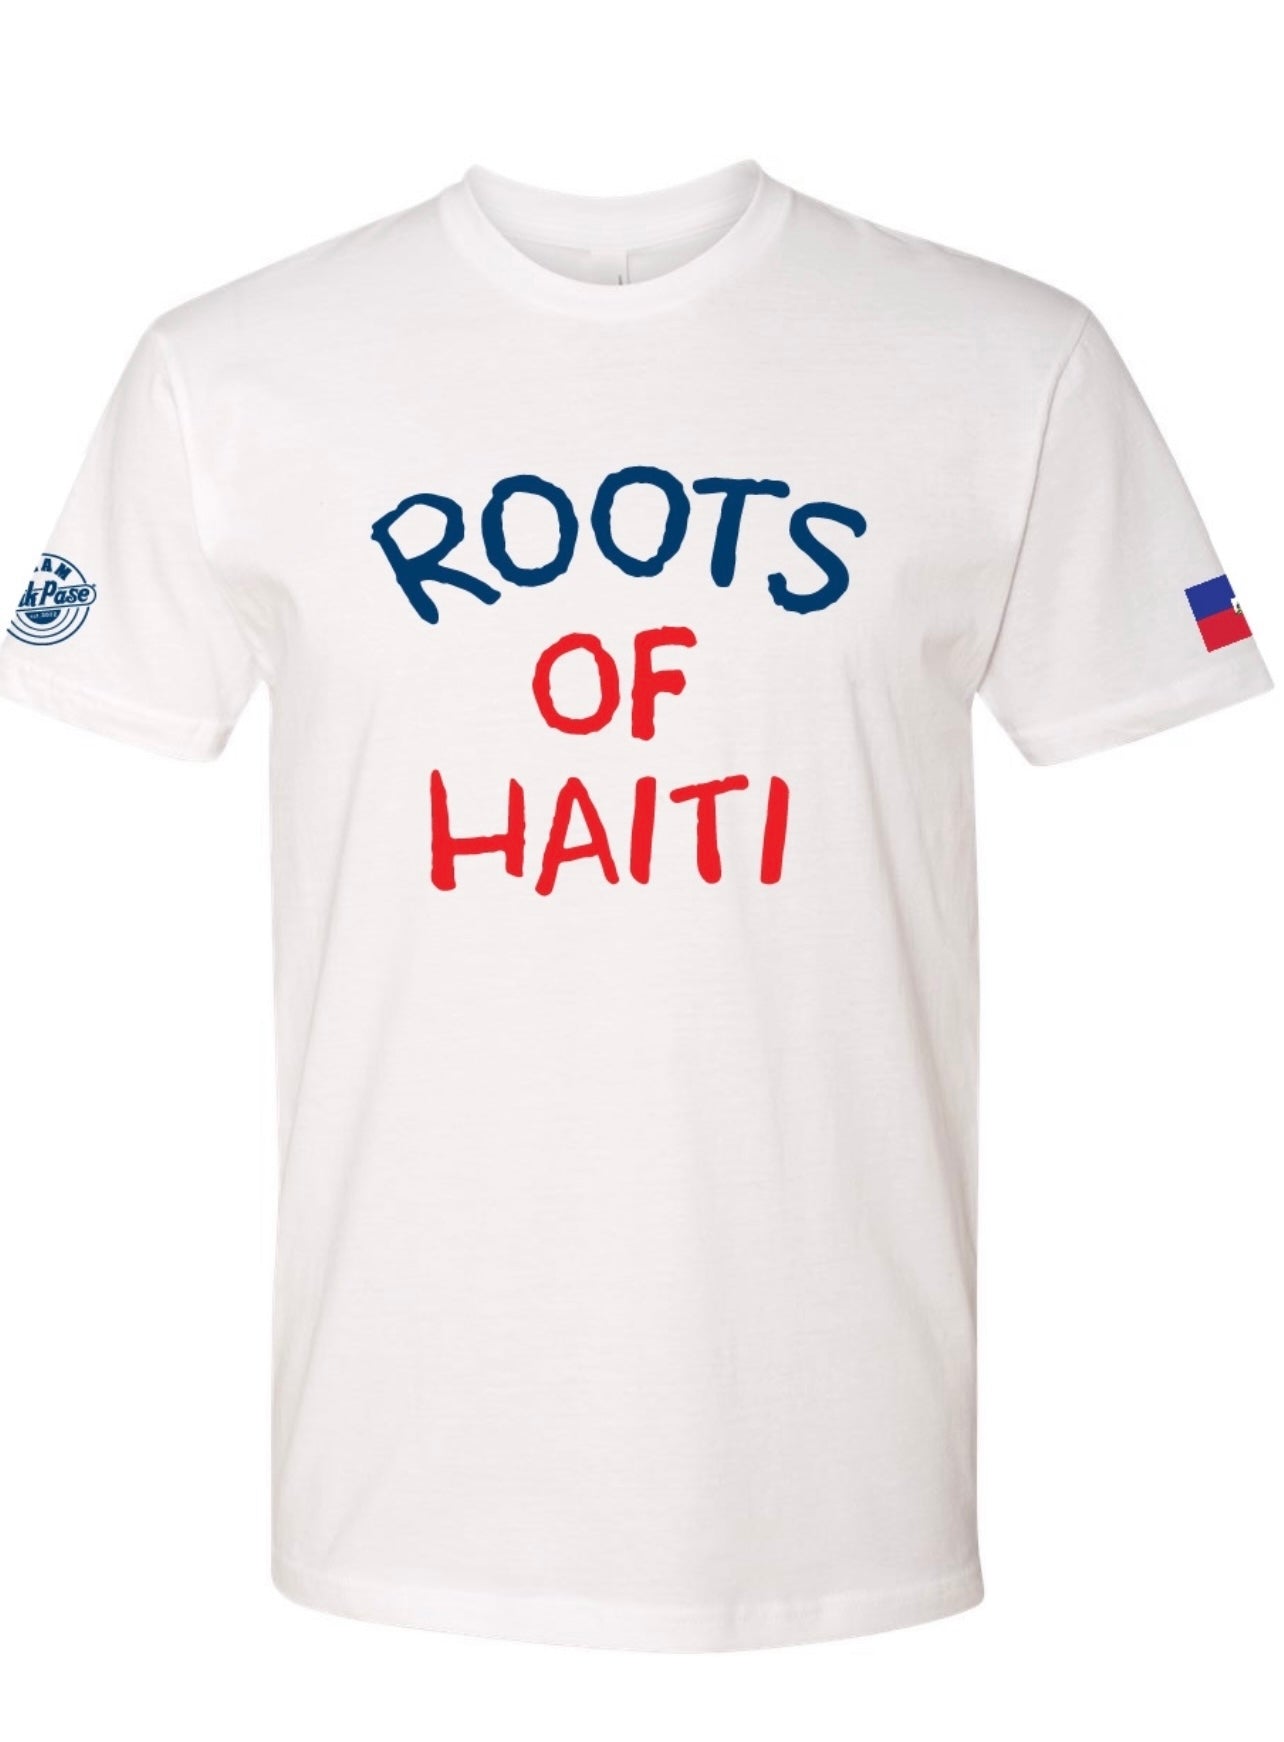 ROOTS OF HAITI BUNDLE PACKAGE